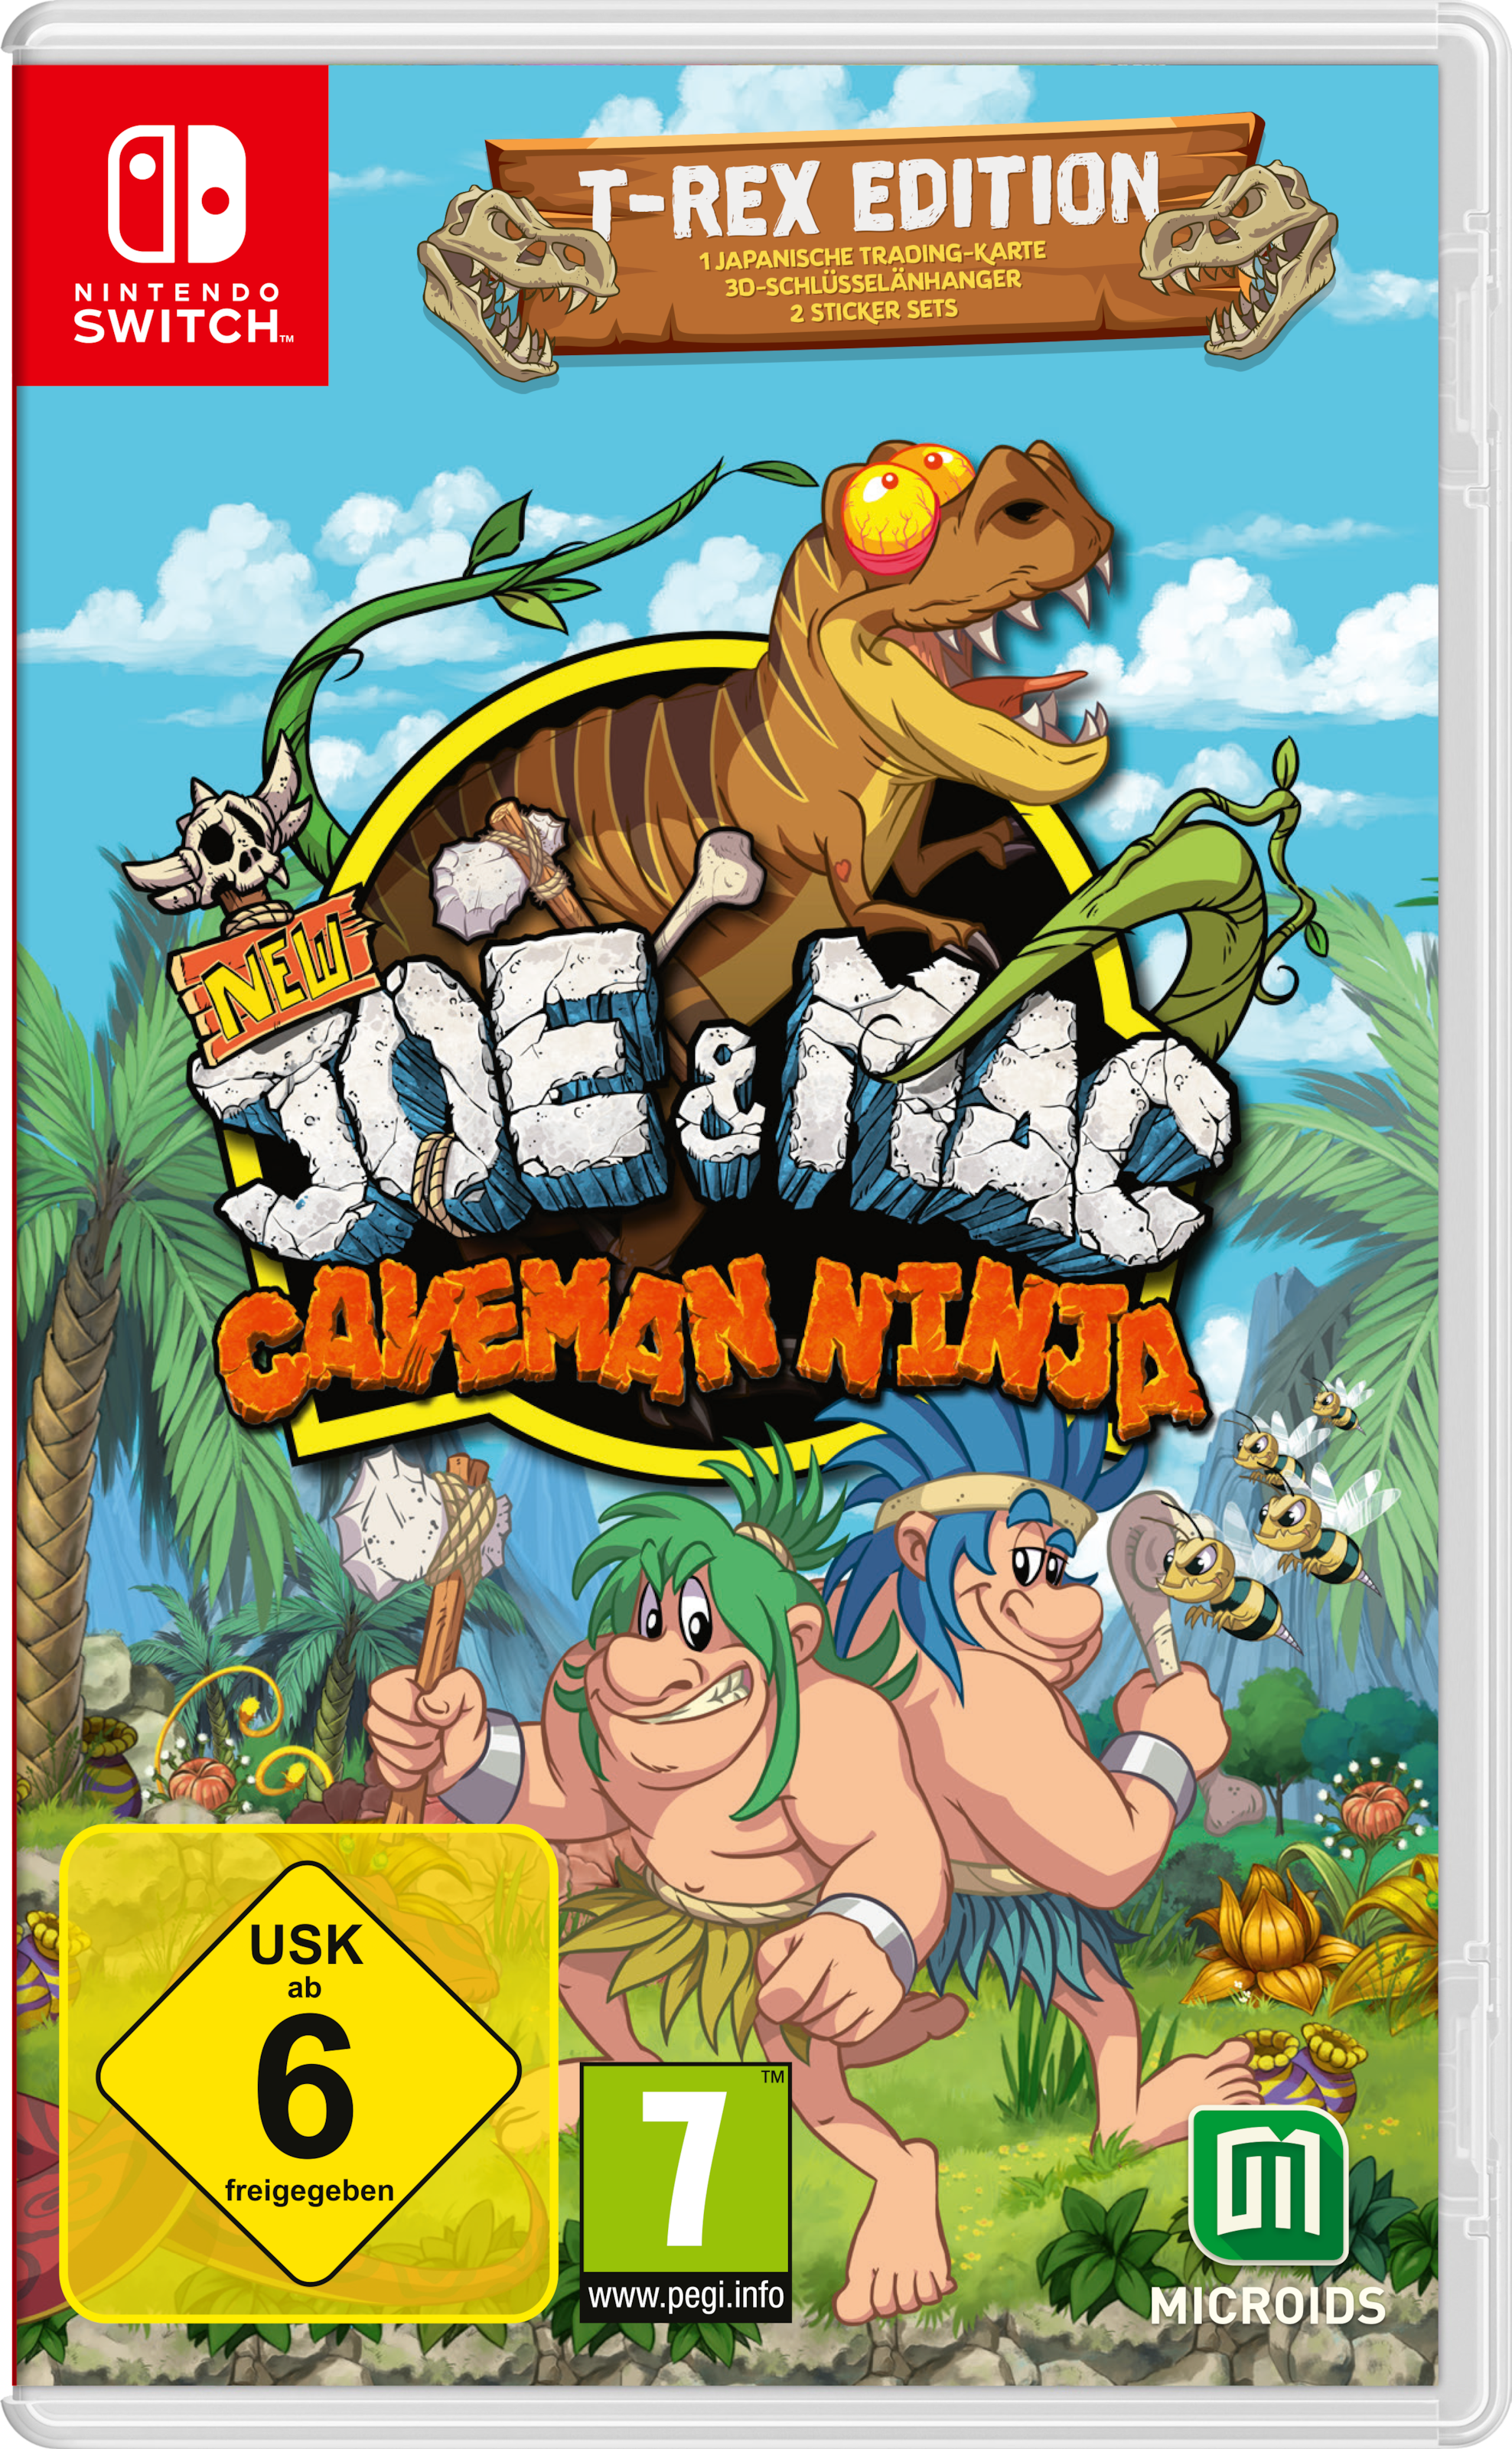 Astragon Spielesoftware »New Joe & Mac: Caveman Ninja - T-Rex Edition«, Nintendo  Switch jetzt online bei OTTO